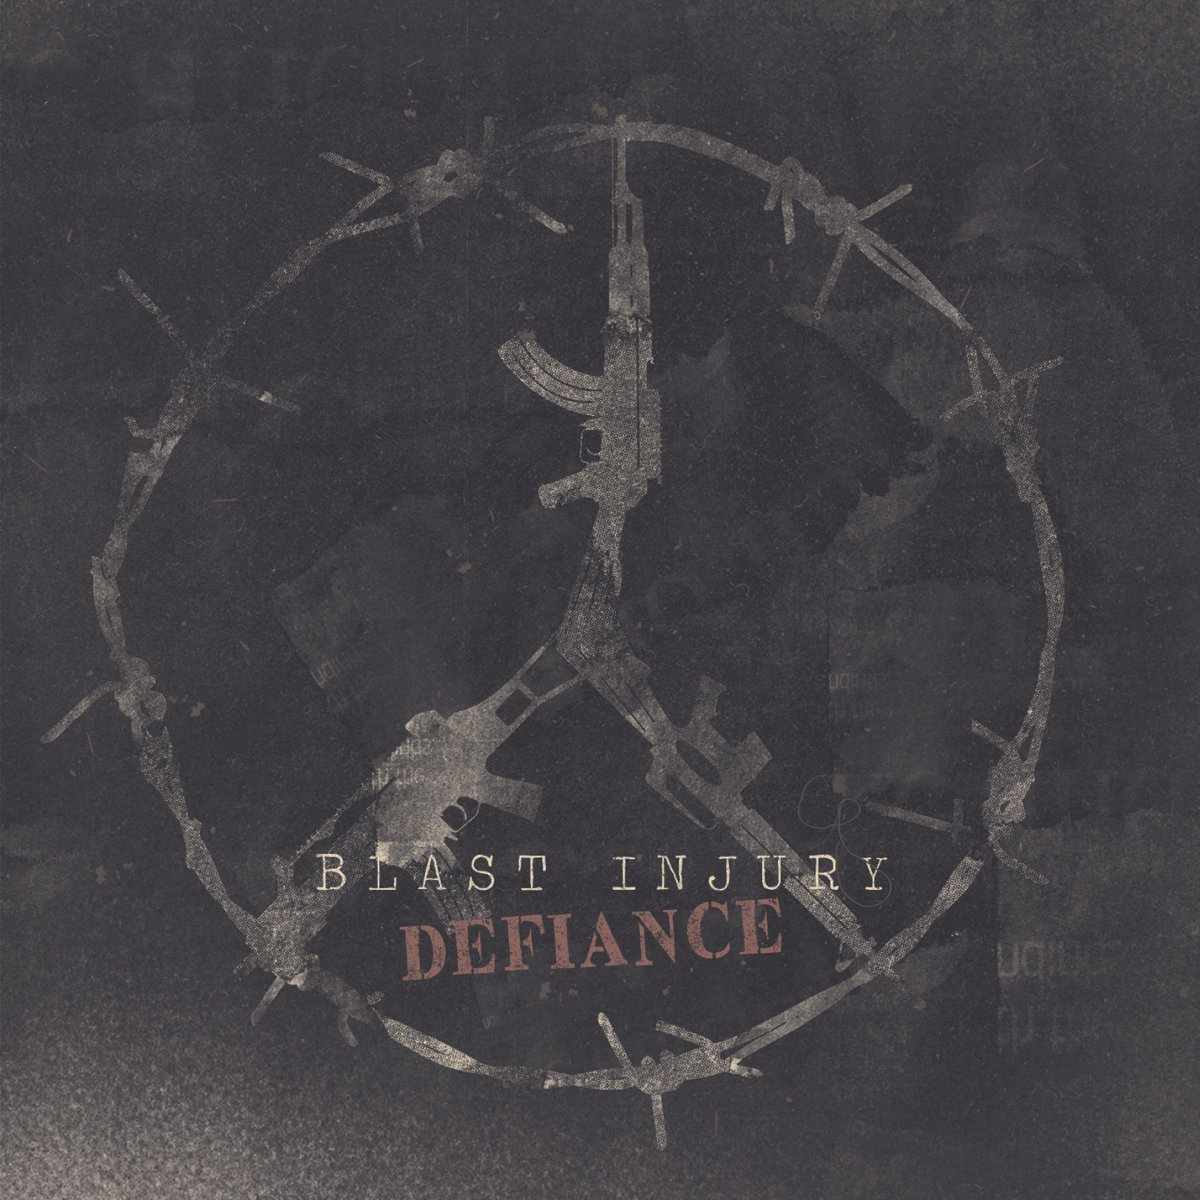 Defiance EP